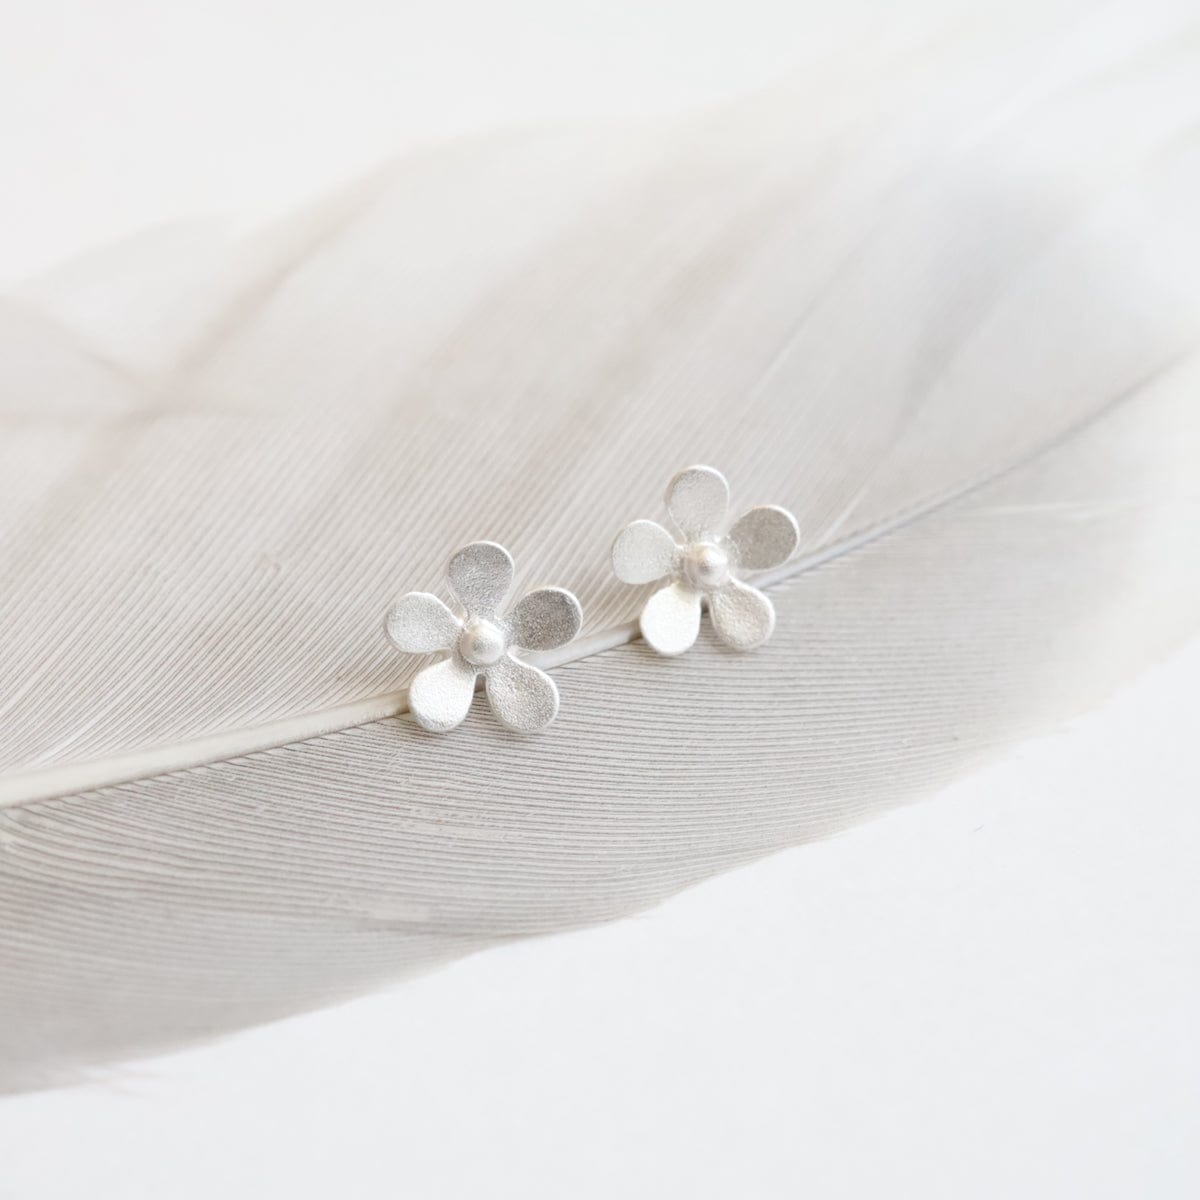 EAR Tiny Flower Stud Earring in Brushed Sterling Silver